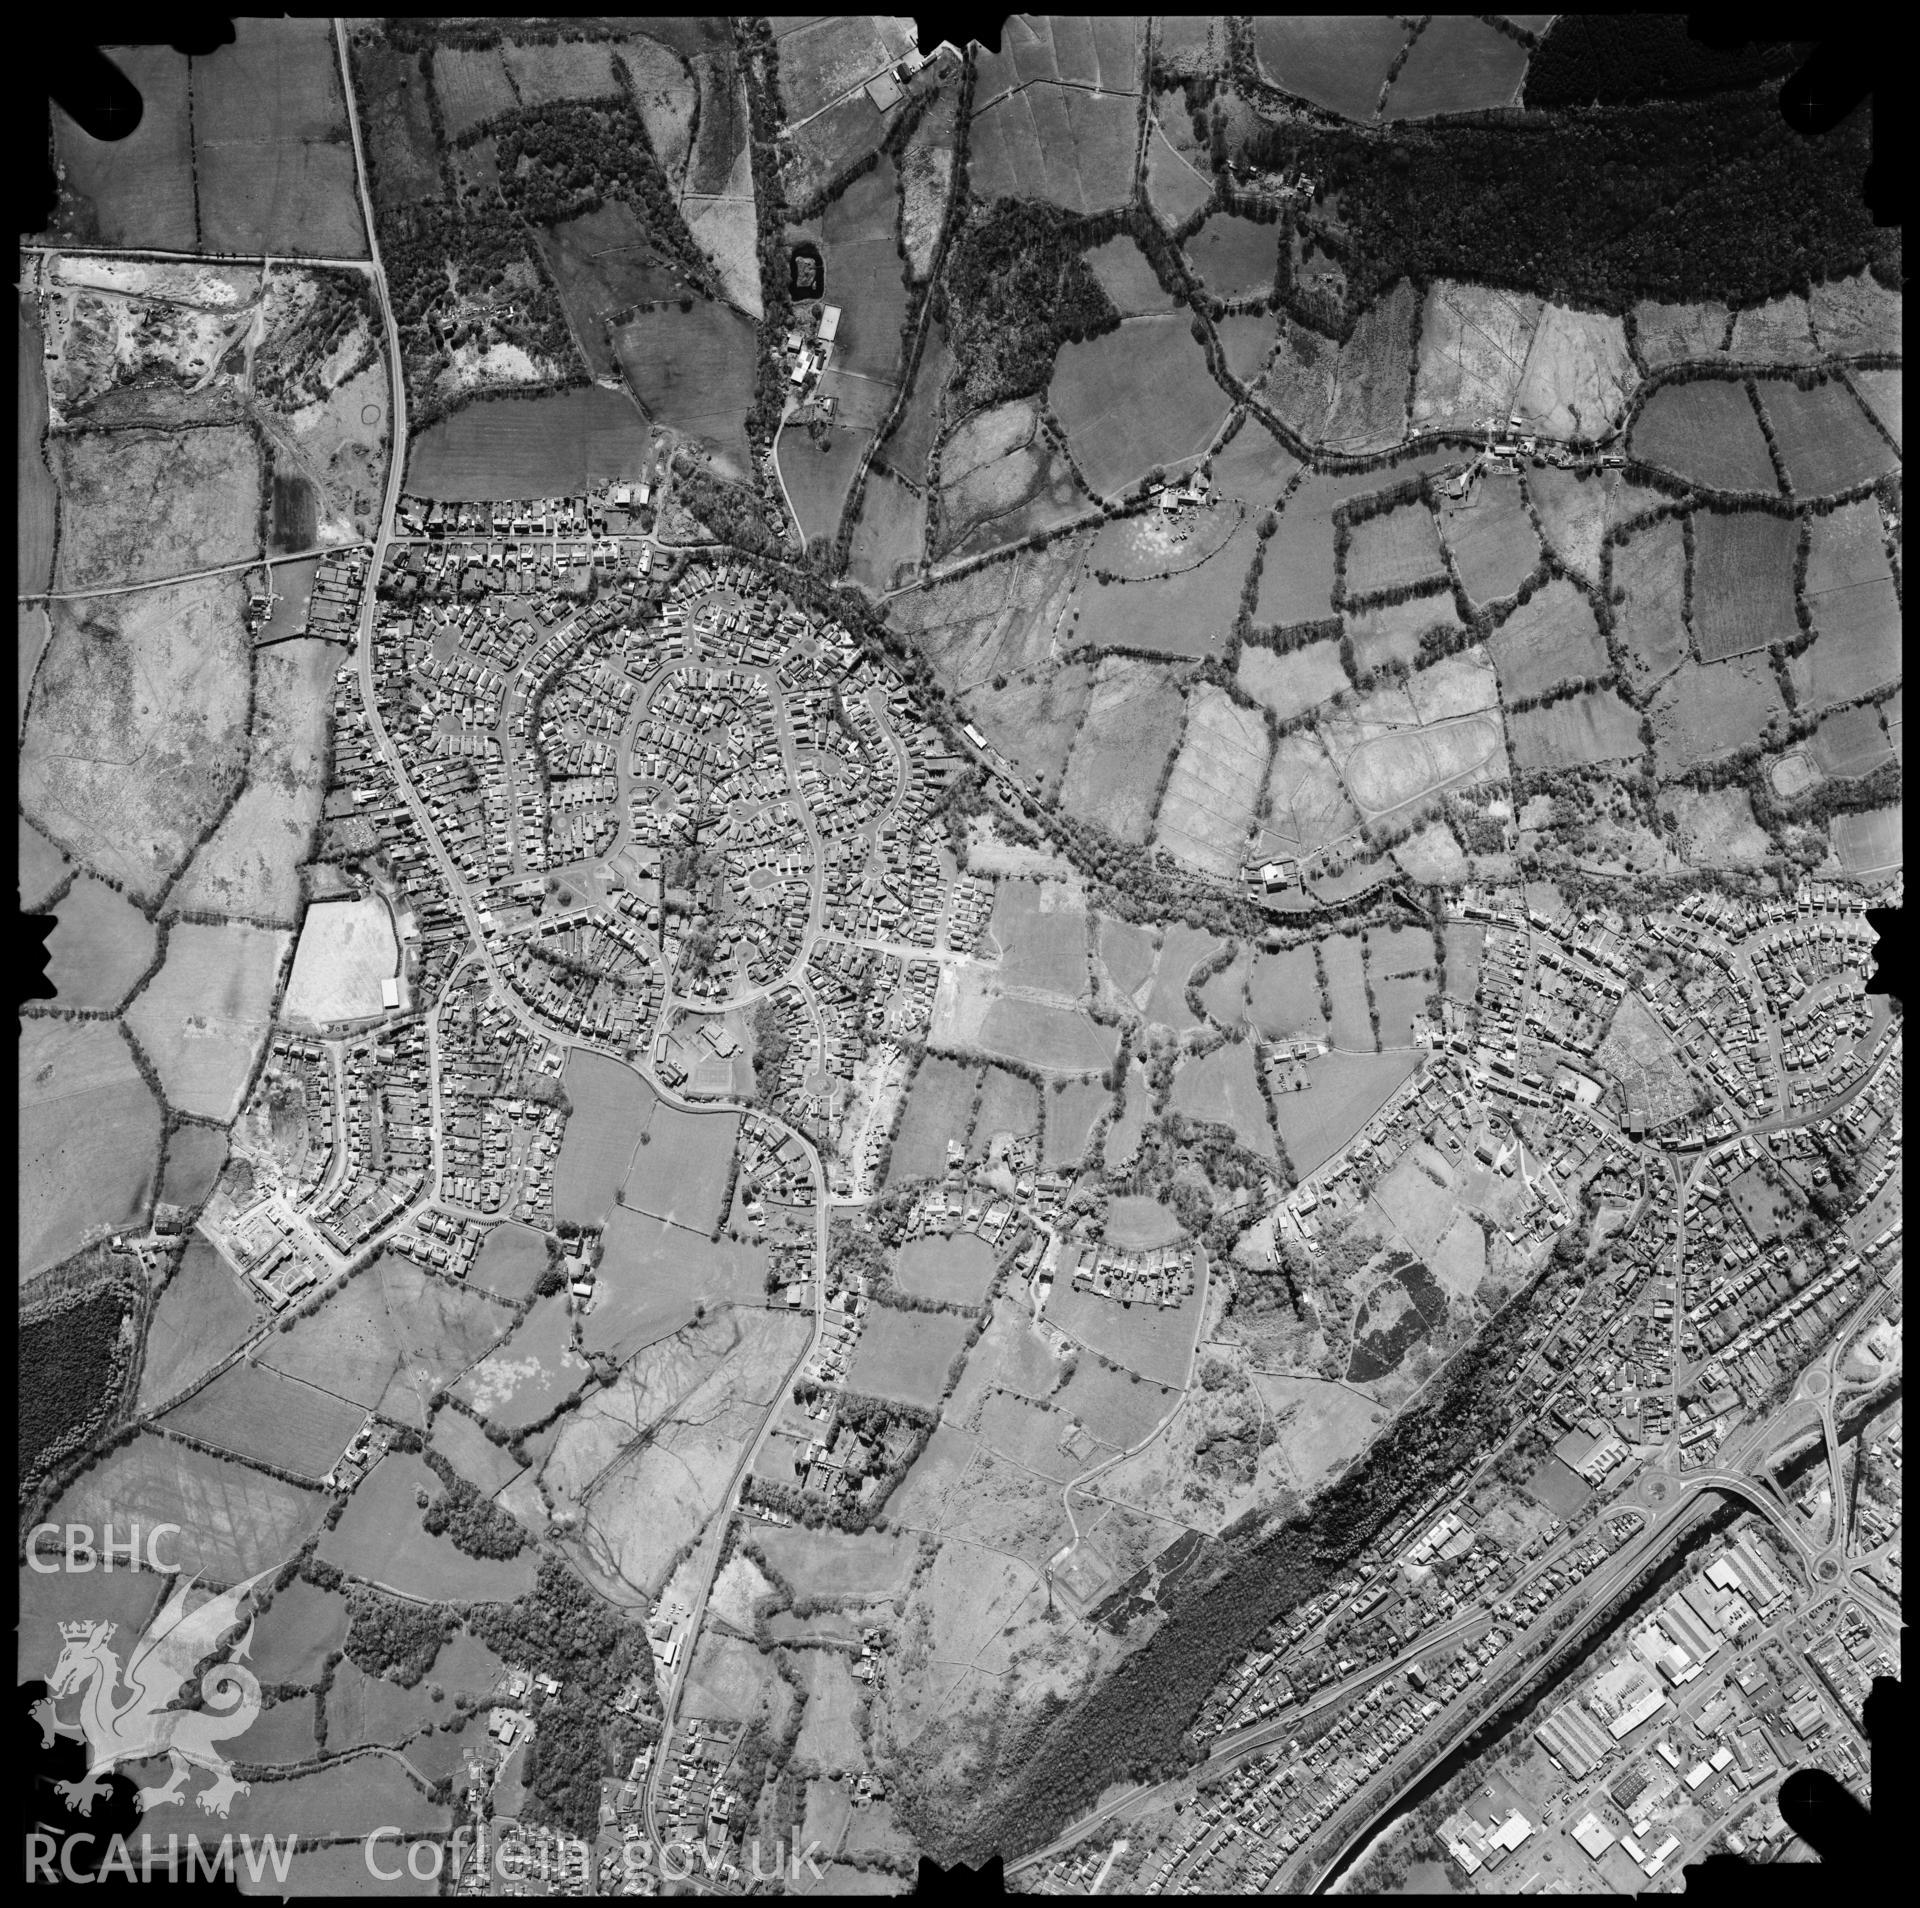 Digitized copy of an aerial photograph showing Alltwen, Pontardawe, taken by Ordnance Survey, April 1997.